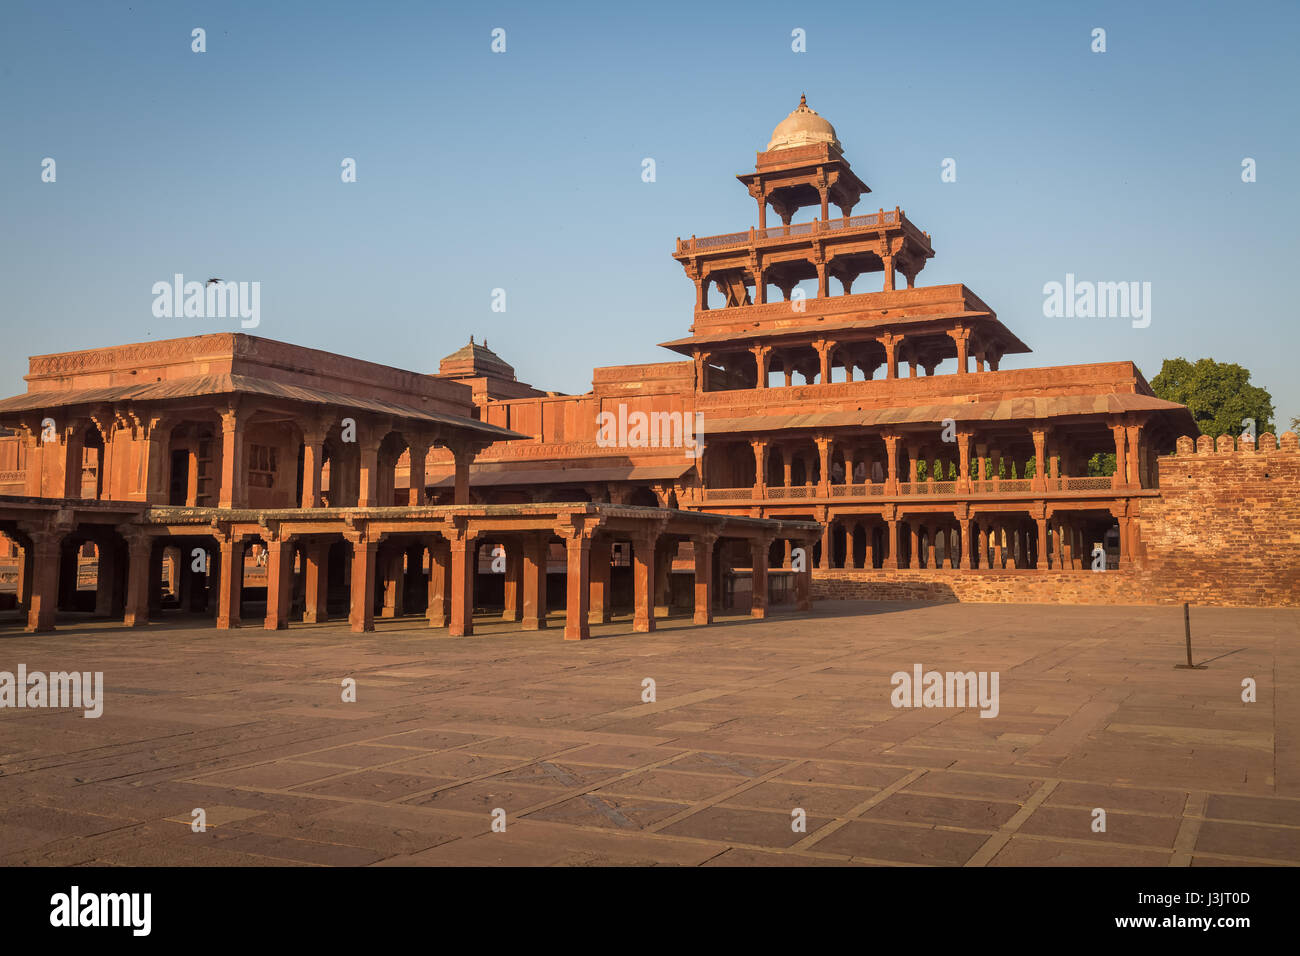 Histórico edificio de arquitectura india panch Mahal construido por el emperador Akbar de Mughal en Fatehpur Sikri, Agra, India. Foto de stock